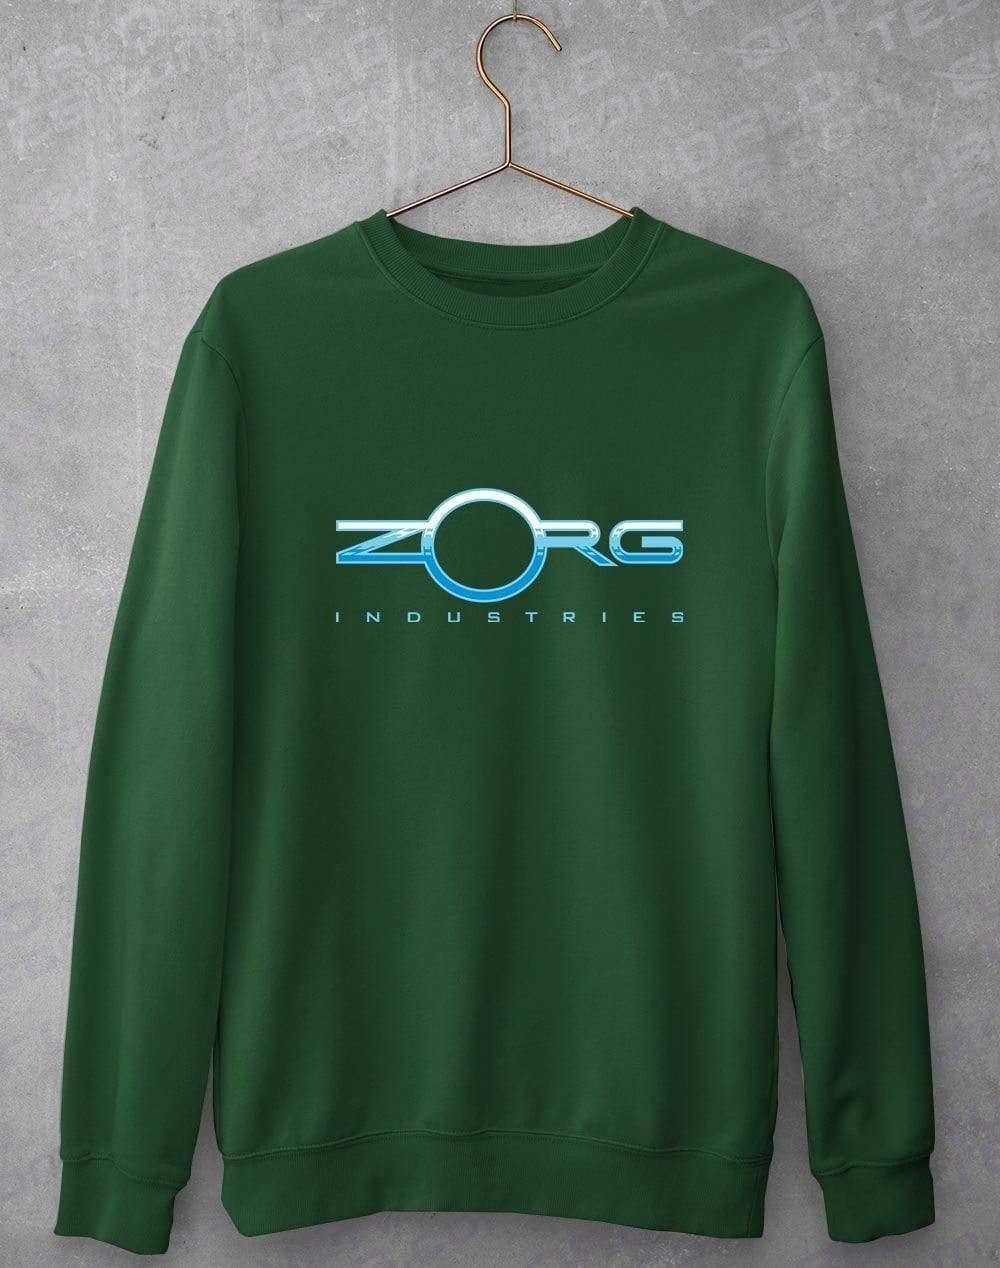 Zorg Industries Sweatshirt S / Bottle  - Off World Tees